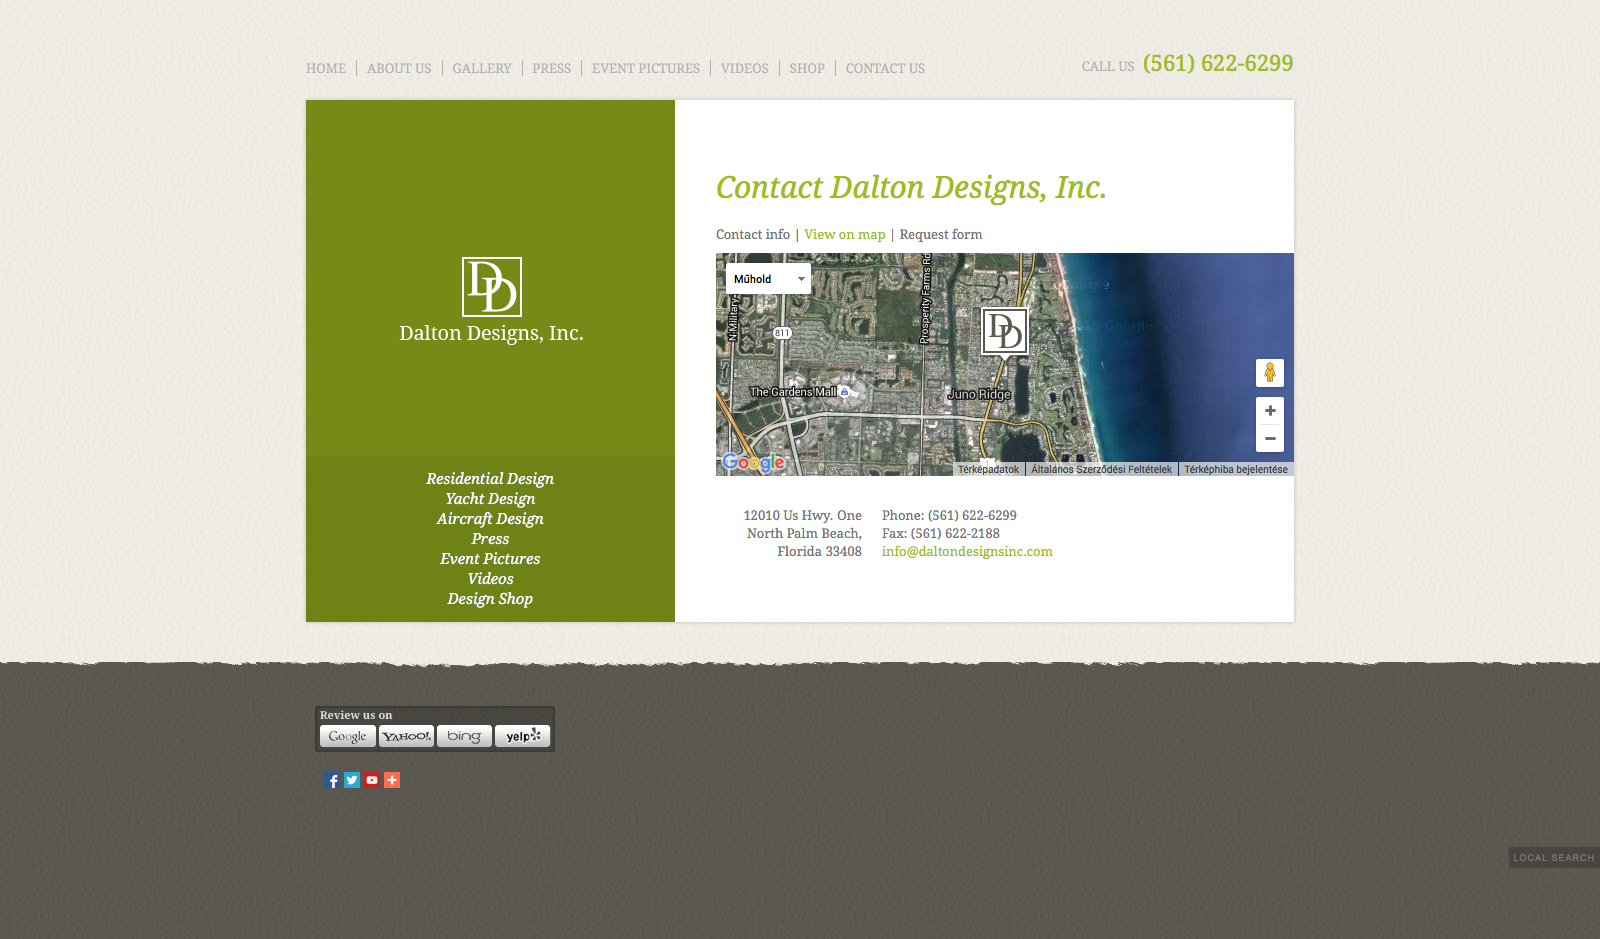 Dalton Designs Inc.